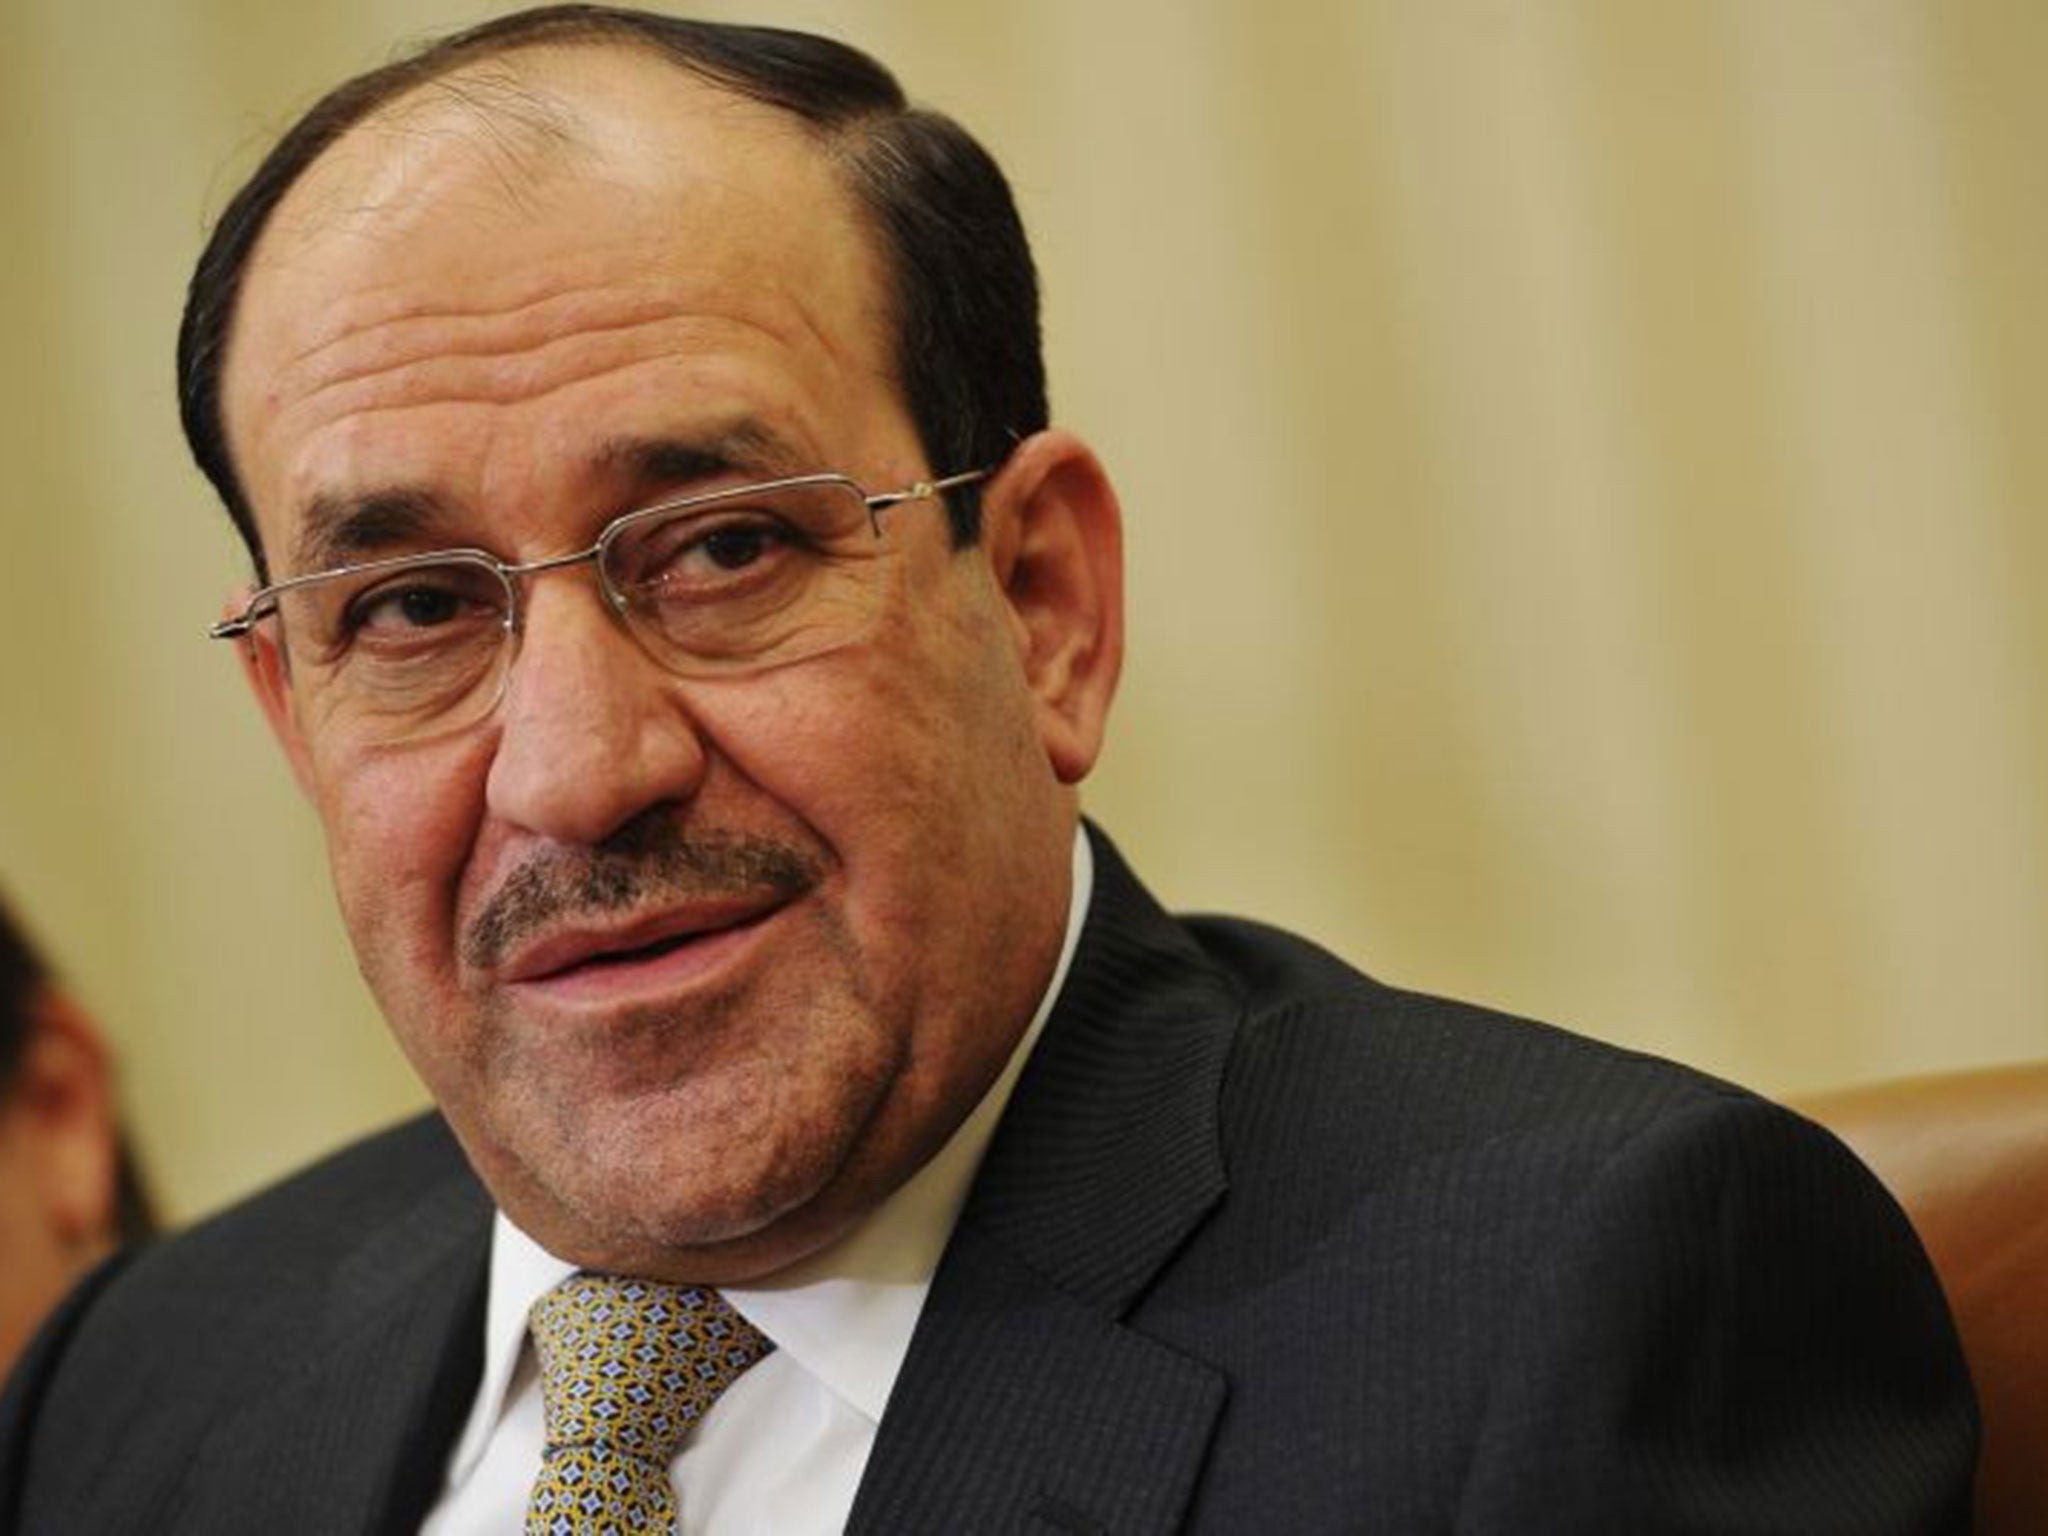 Iraqi Prime Minister Nouri al-Maliki was accused of persecuting Iraq's Sunni minority